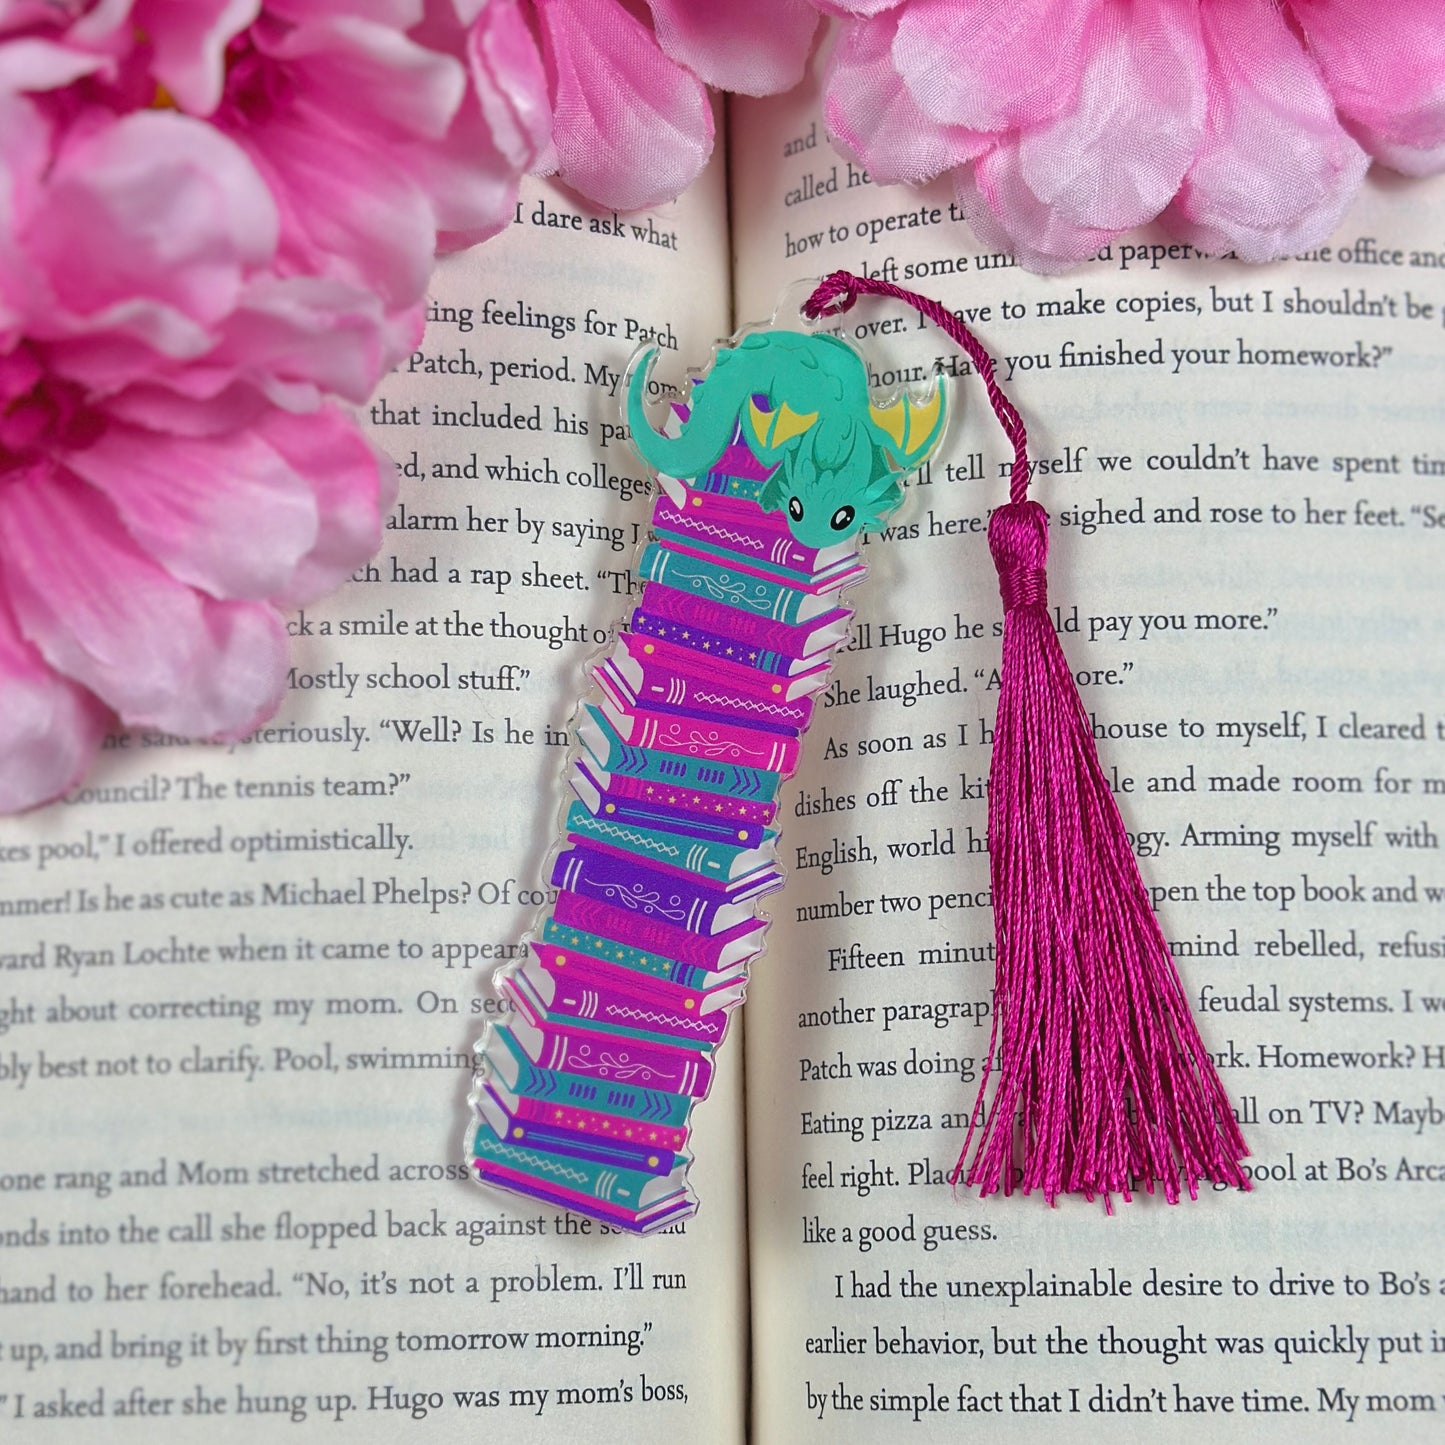 Book Dragon Acrylic Bookmark